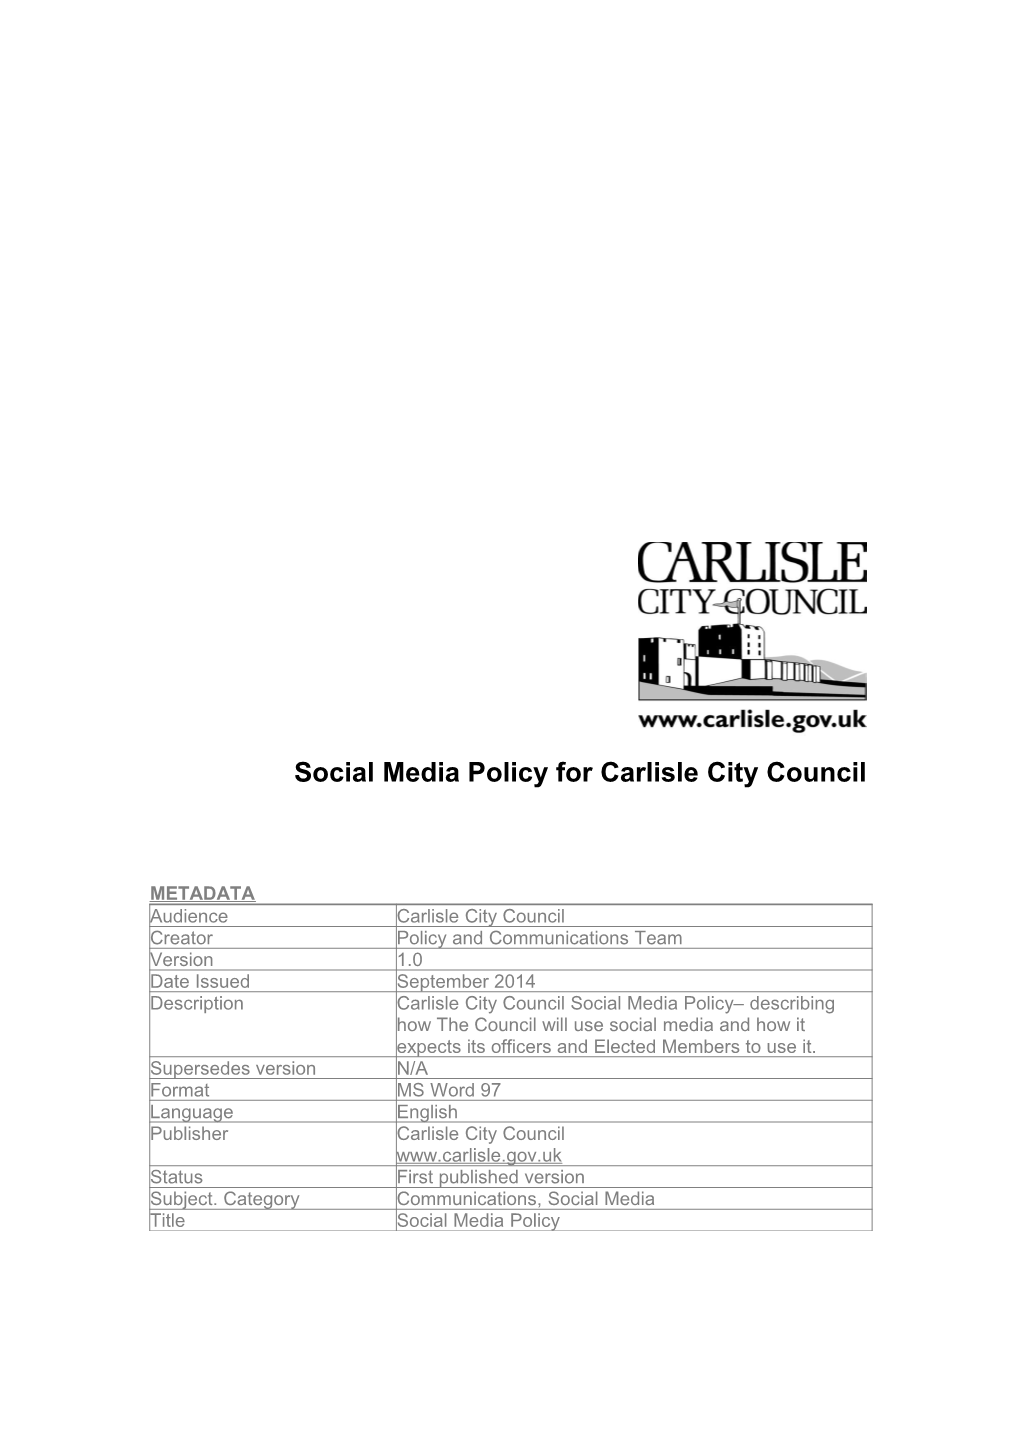 Social Media Policy V1.0 Sept 2014